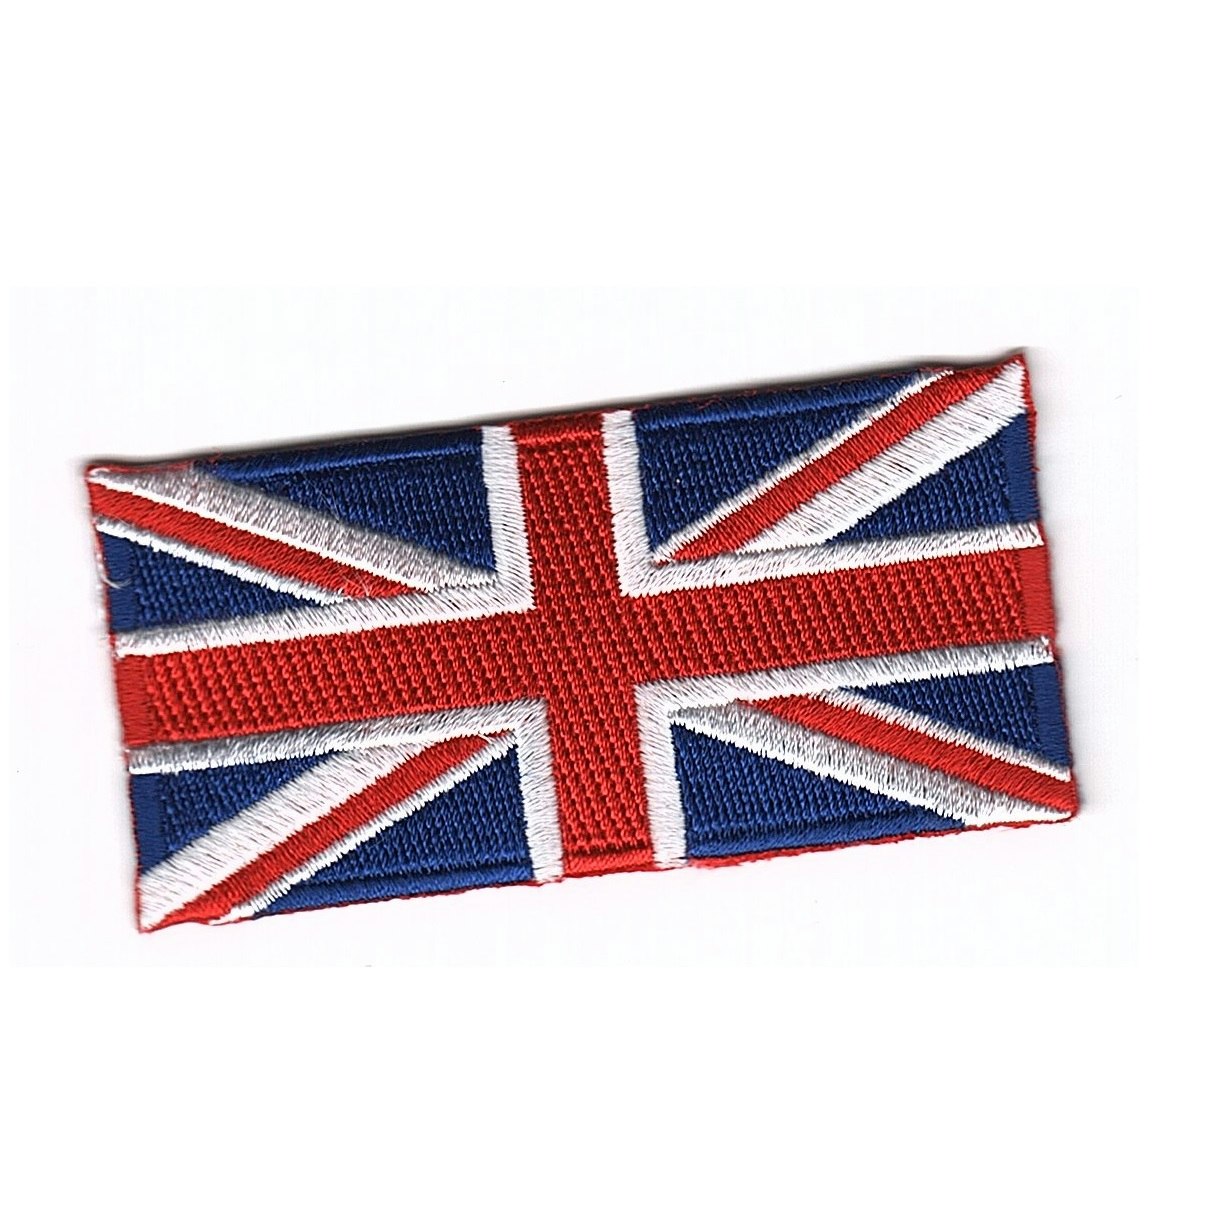 Flagga Storbritannien / UK